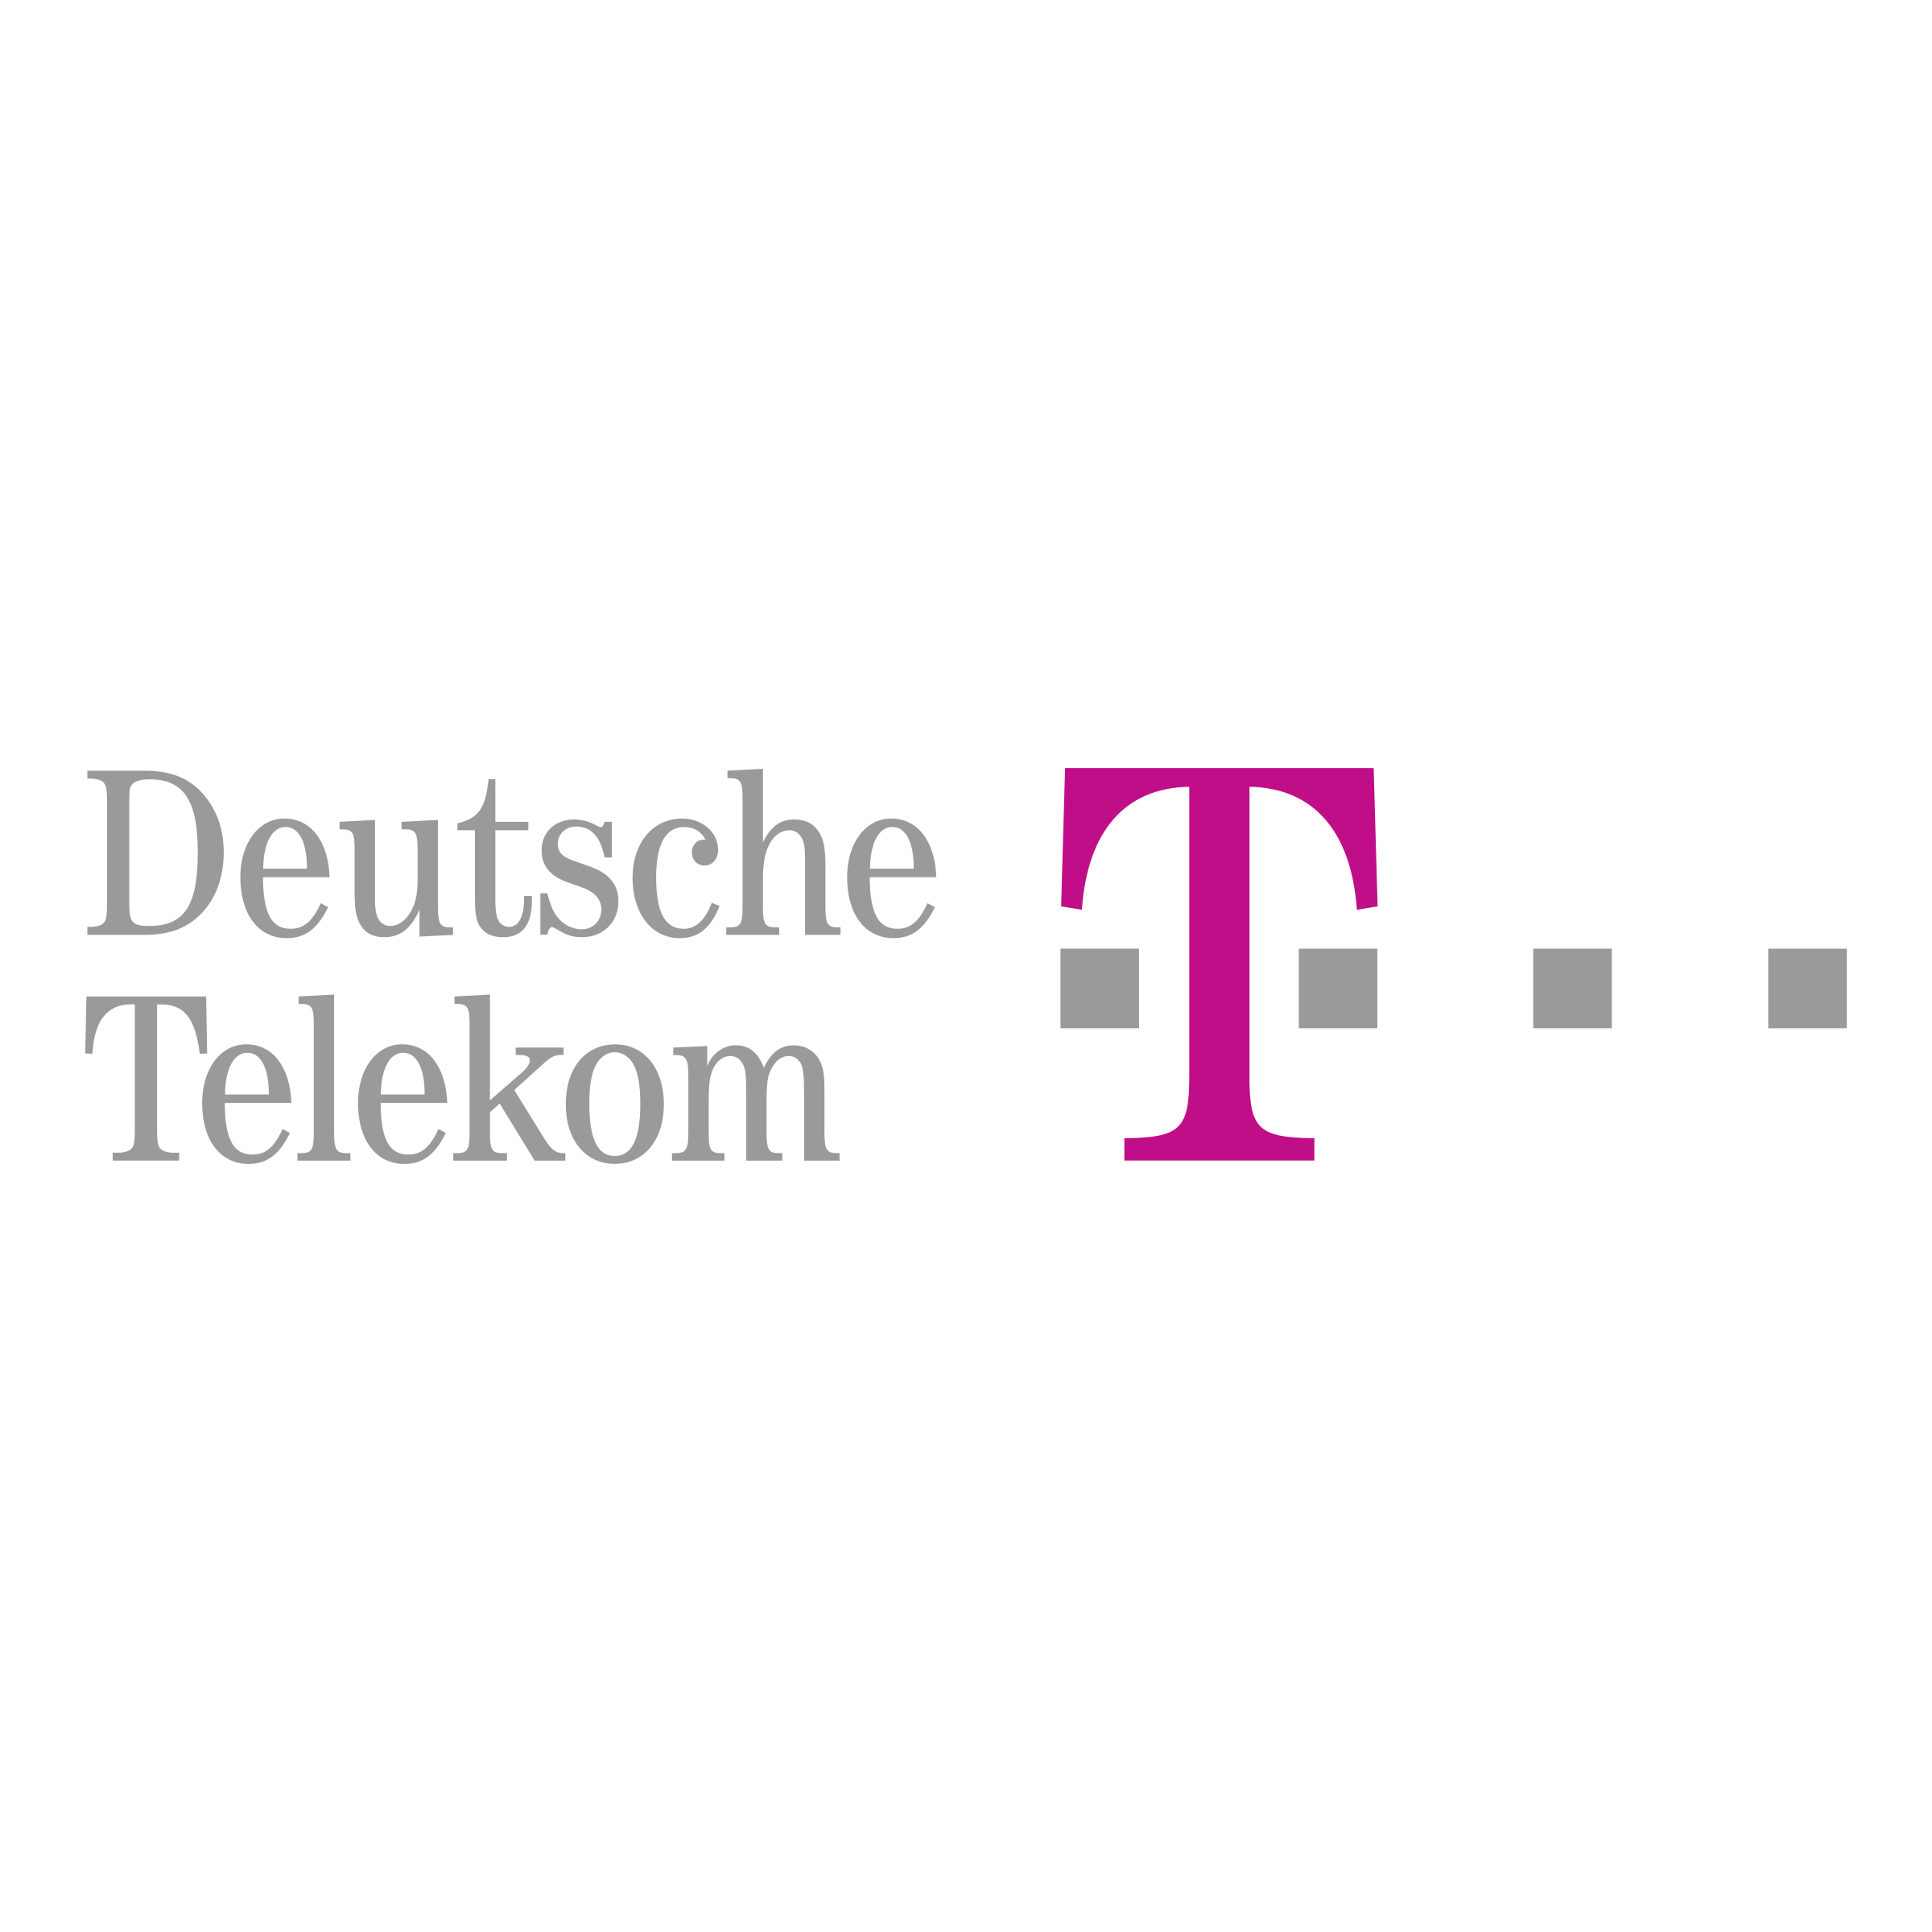 deutsche-telekom-2-logo-png-transparent